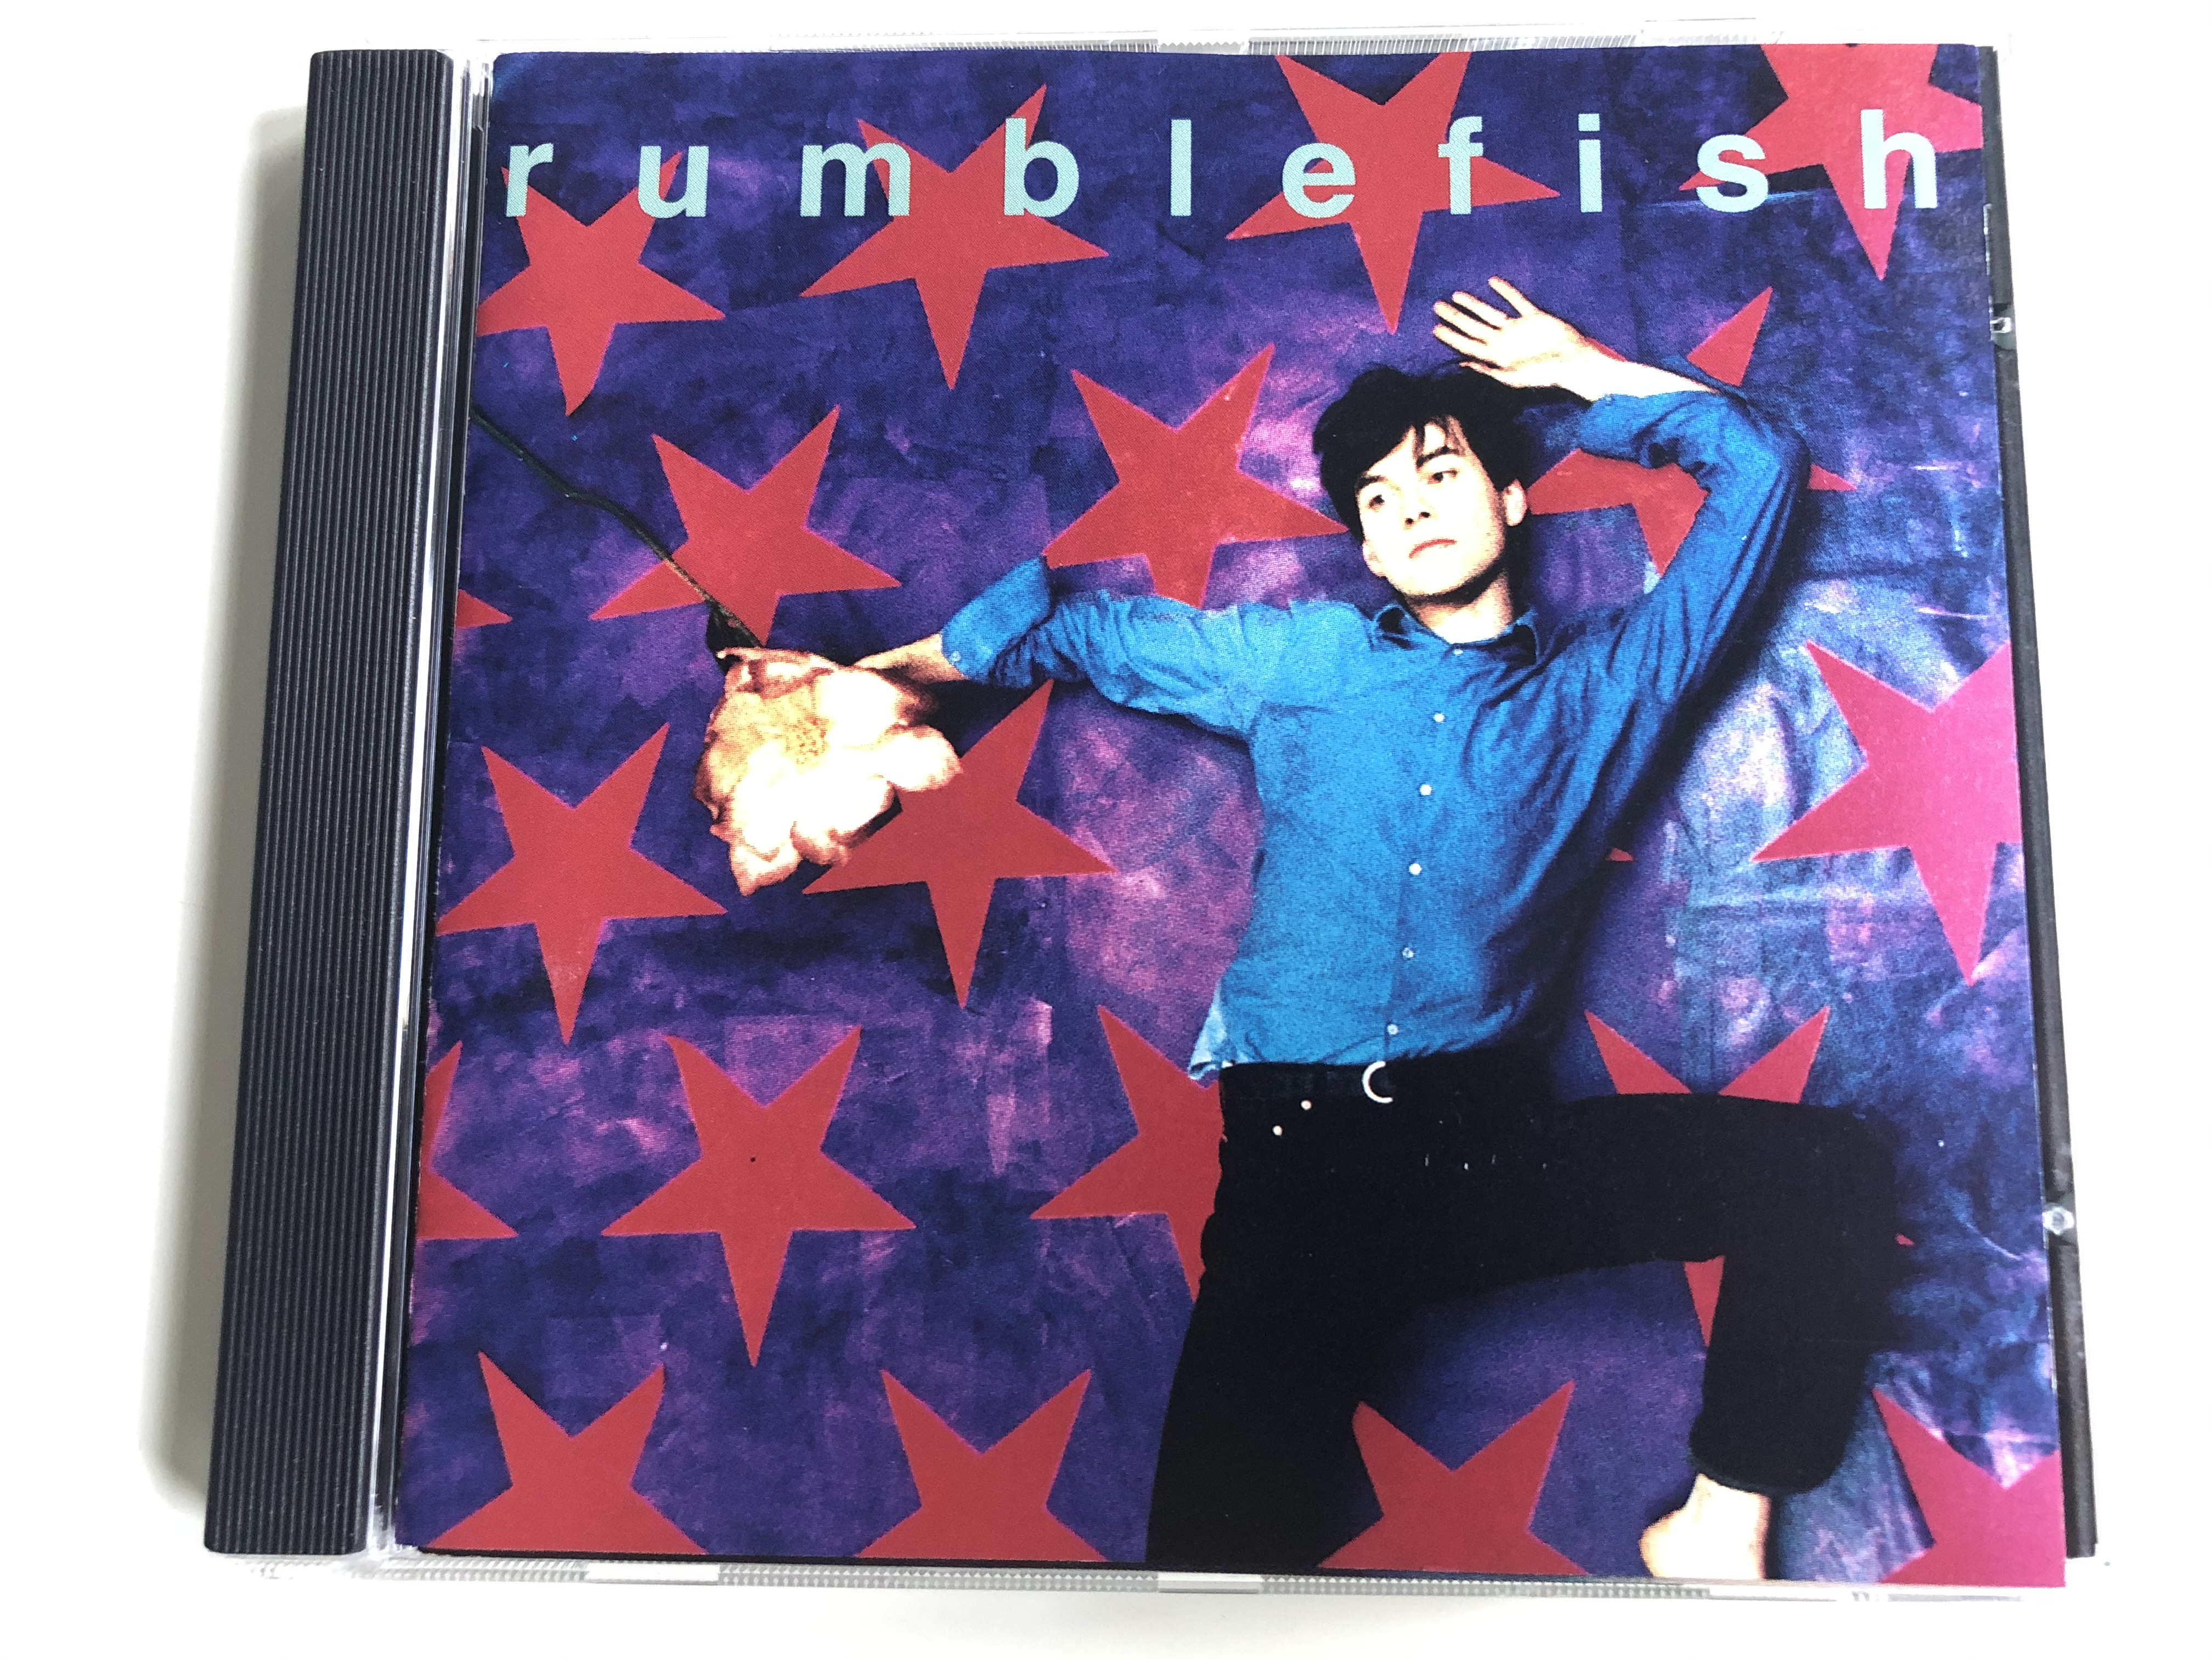 rumblefish-eastwest-records-america-audio-cd-1992-792144-2-1-.jpg